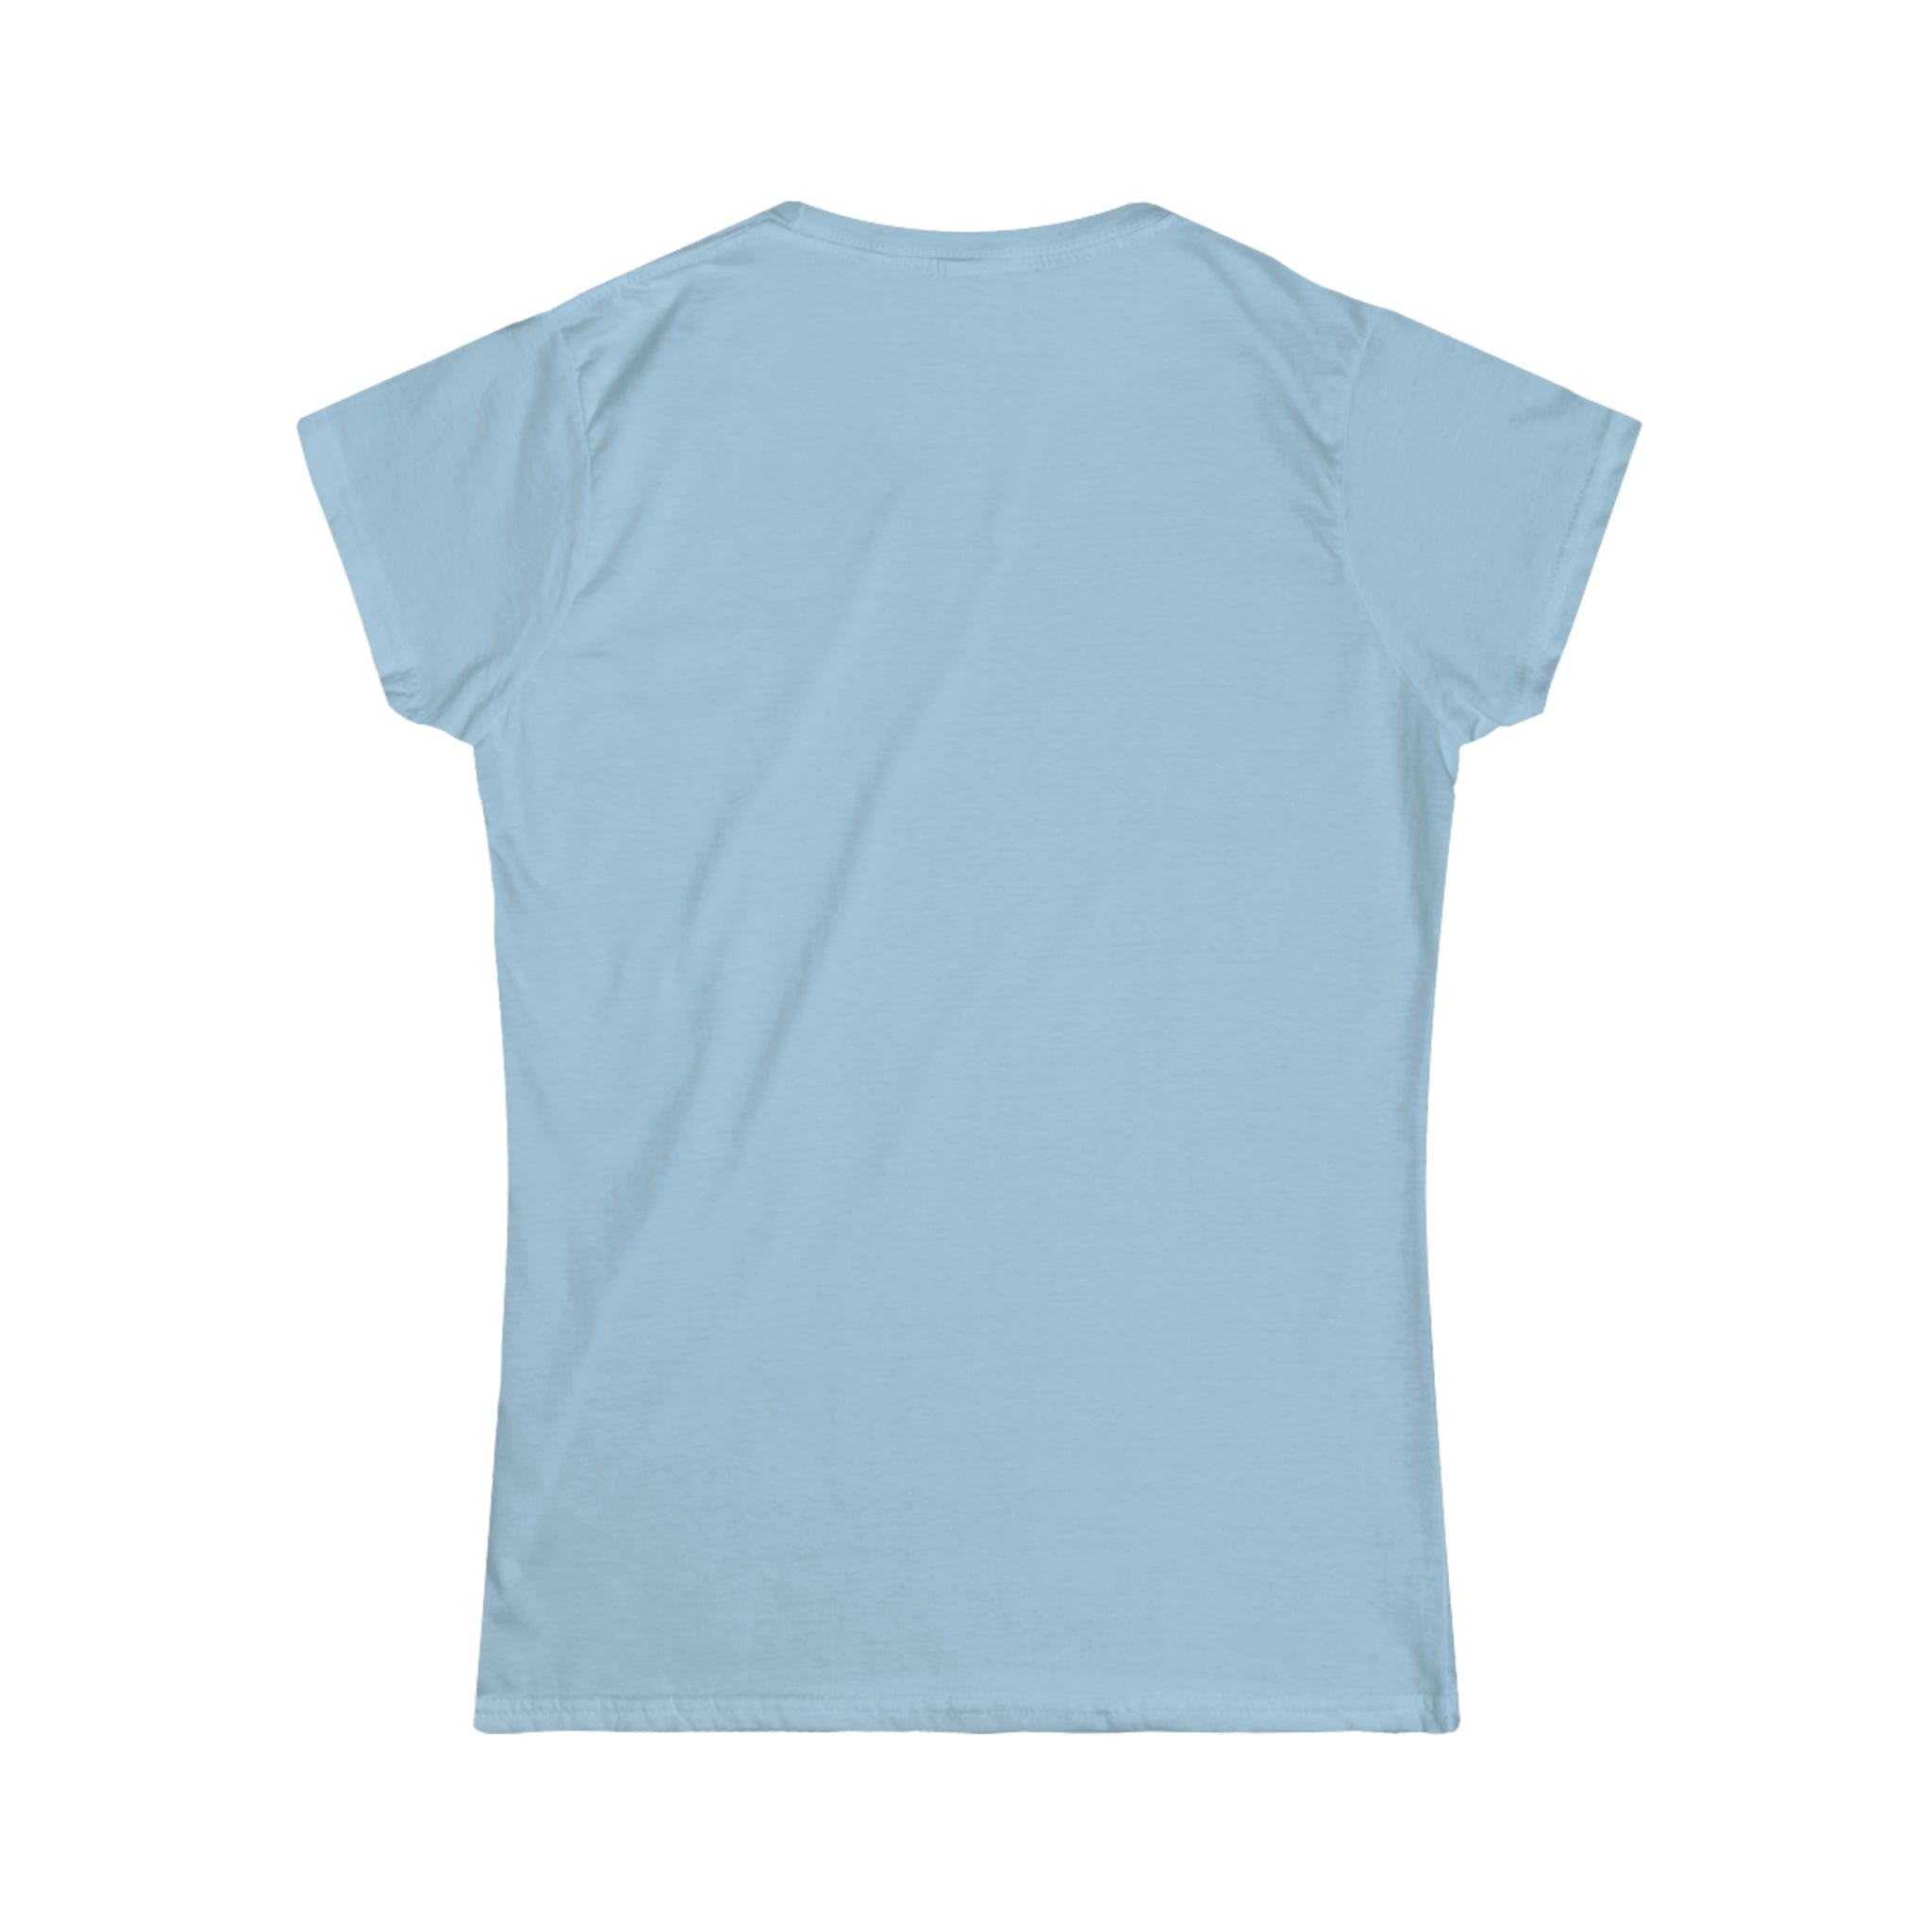 Printify T-Shirt Sly Fox Women's Softstyle Tee - S-2XL